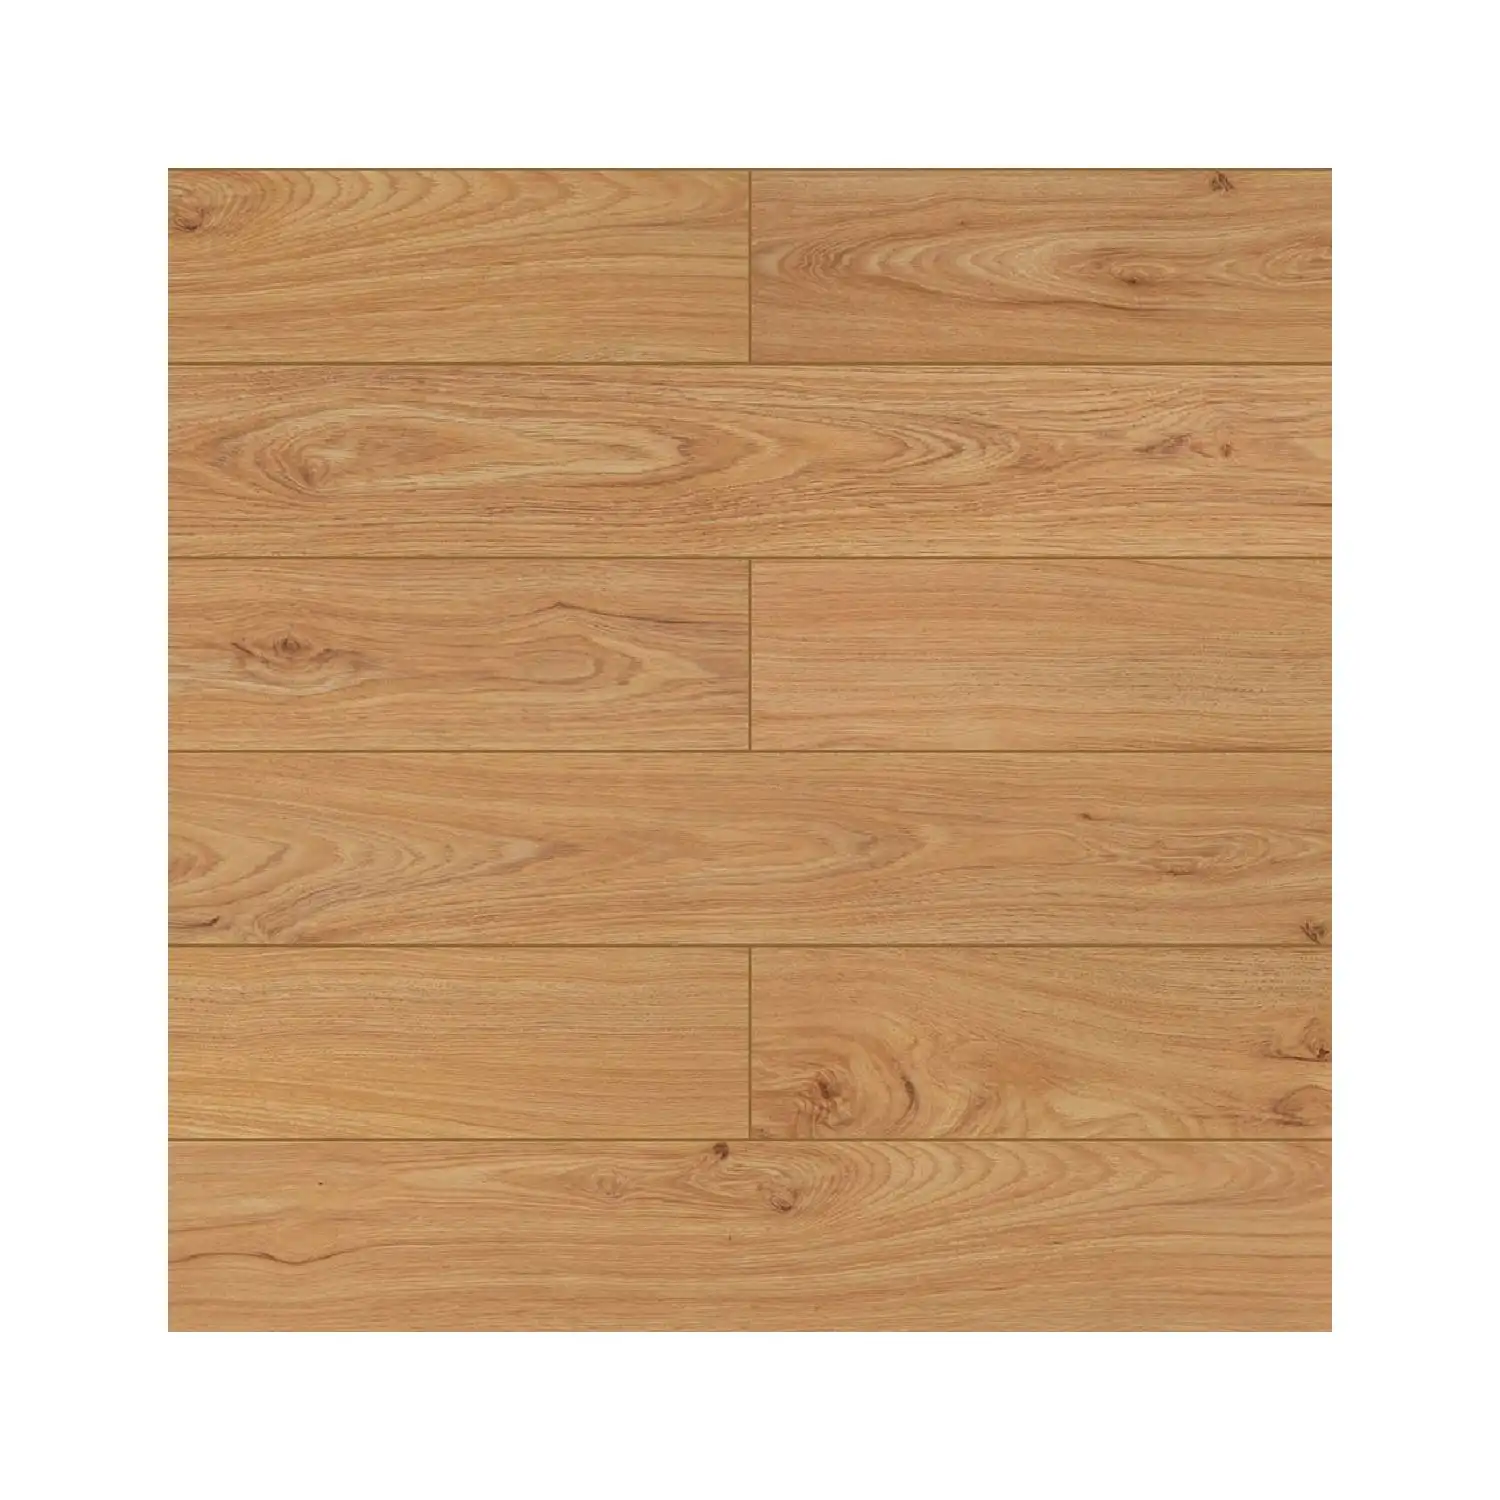 High Quality Solid Wood Flooring Laminated Engineered Wood Plank Parquet Flooring